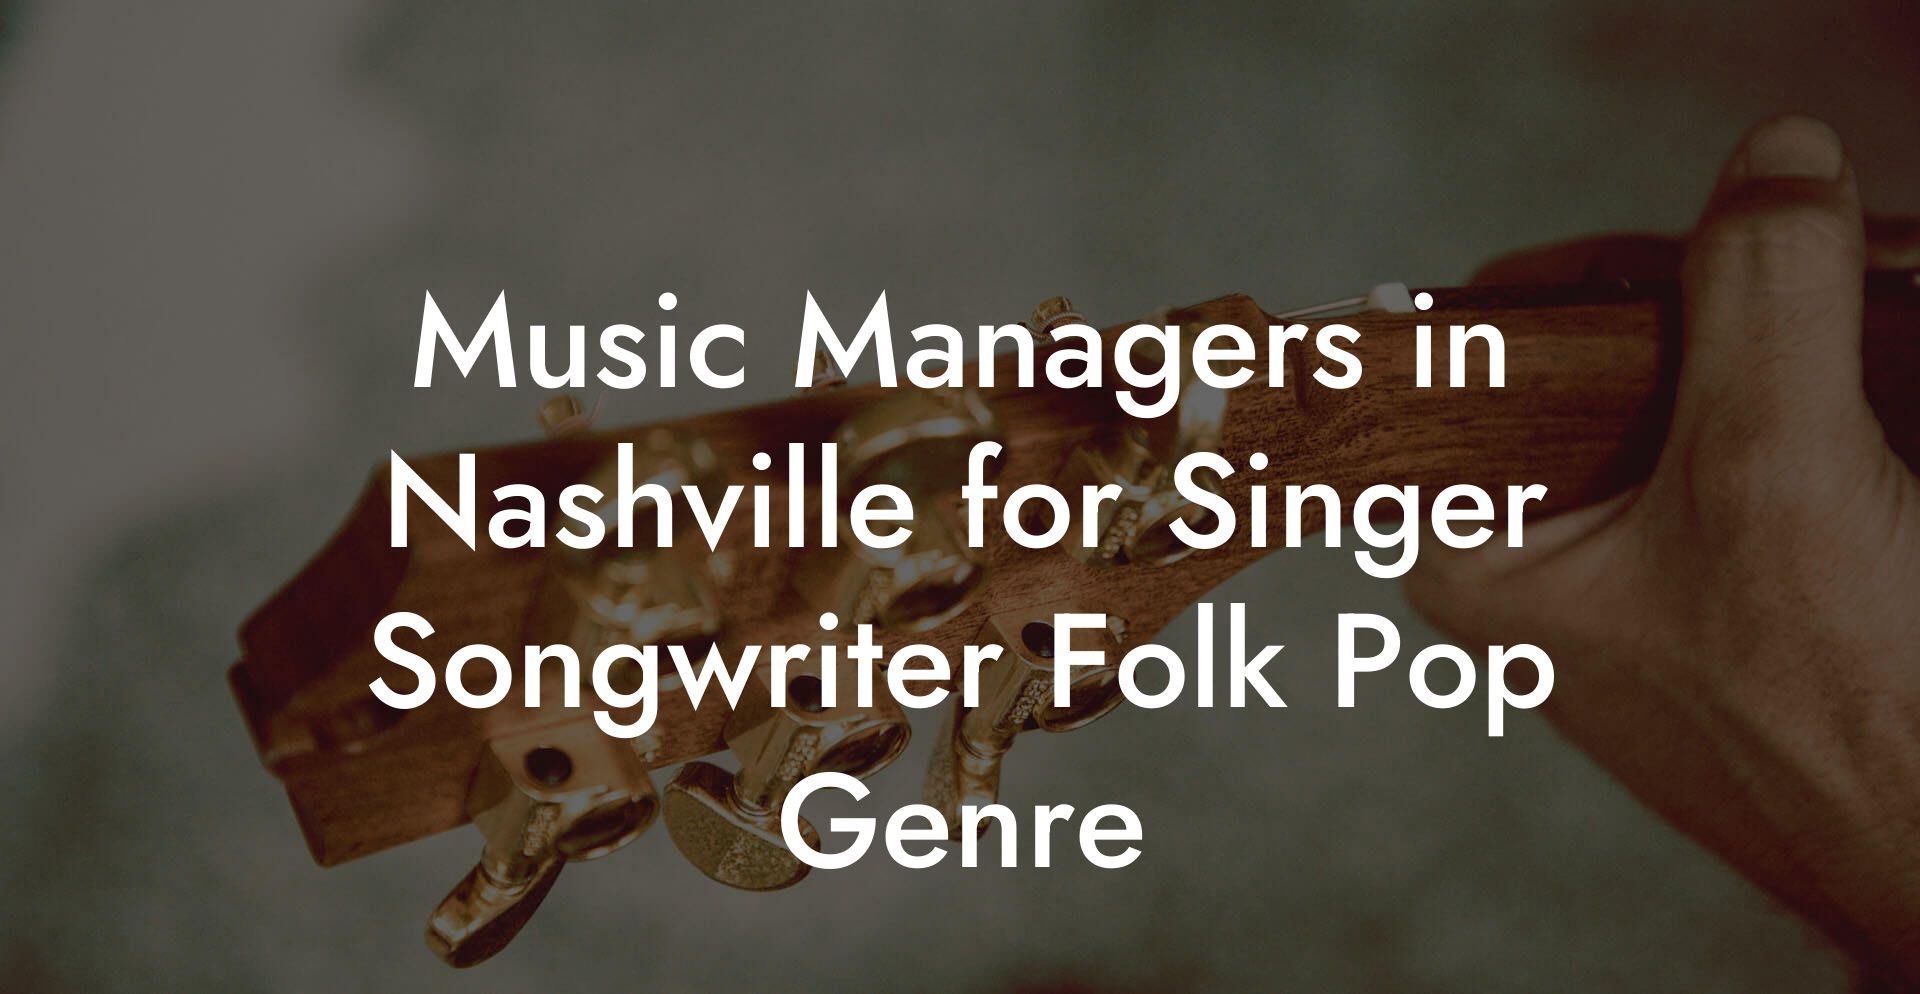 Music Managers in Nashville for Singer Songwriter Folk Pop Genre